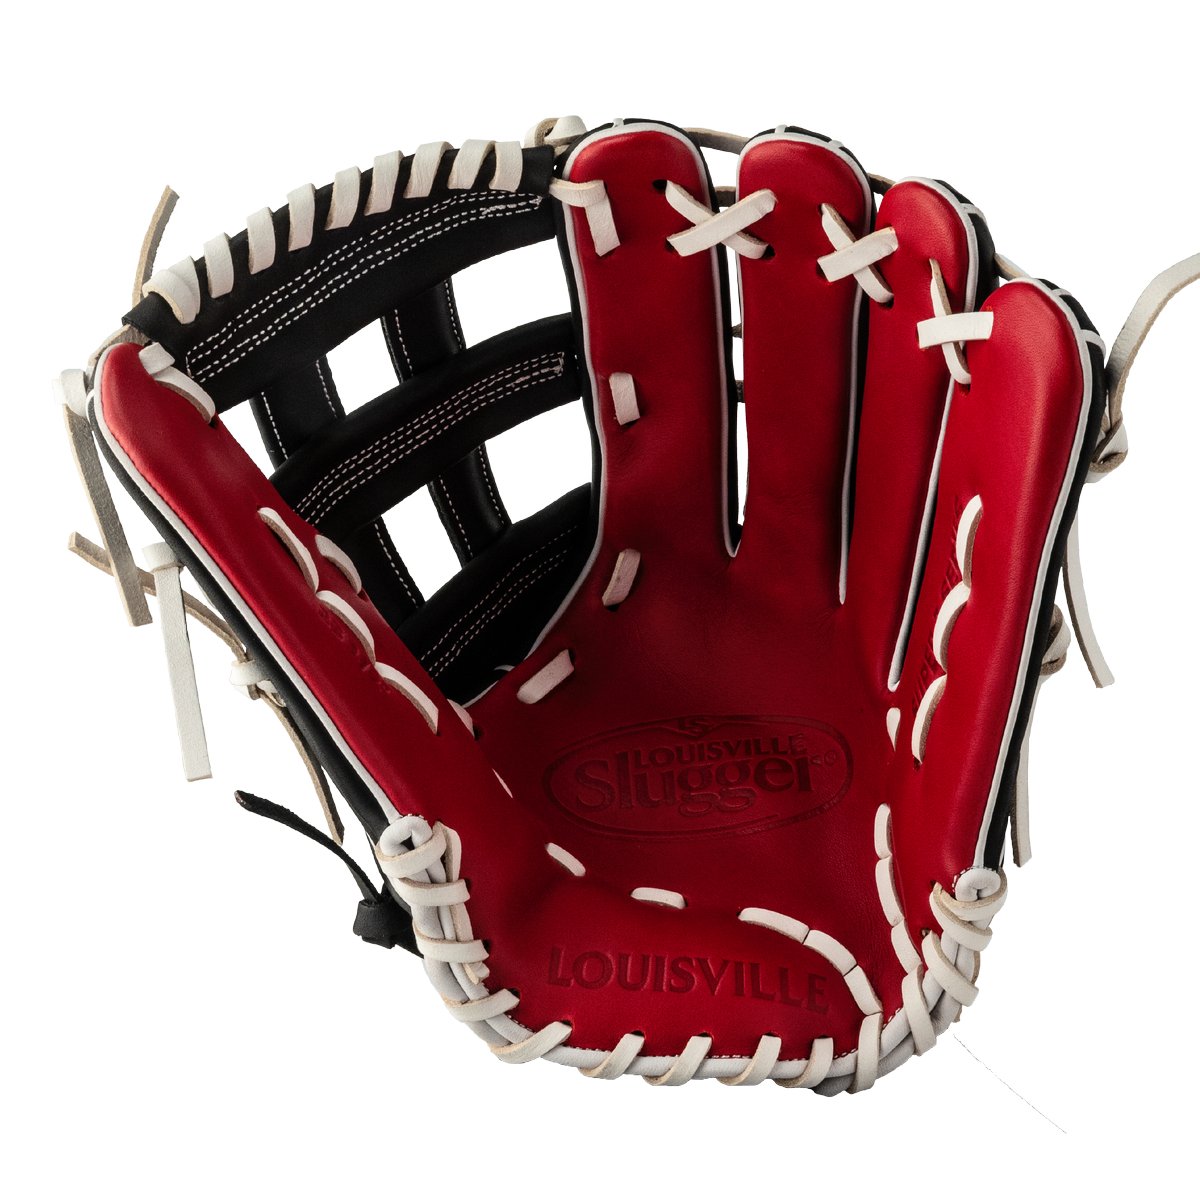 Super Z Slowpitch Fielding Glove 24 - Red - Black - White (8255122440431)